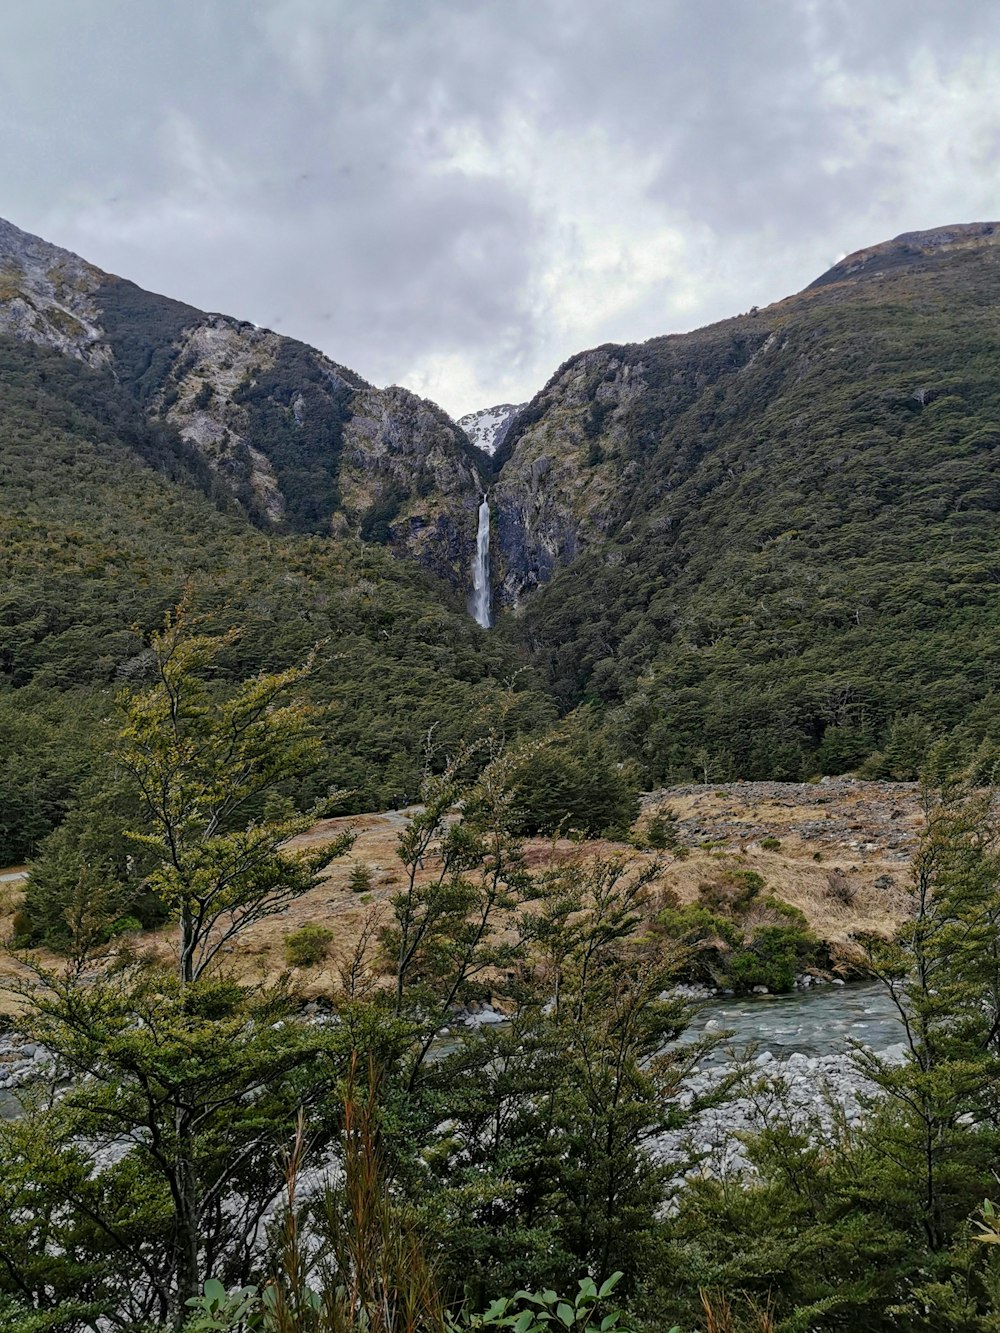 waterfall between cliffs facing trees